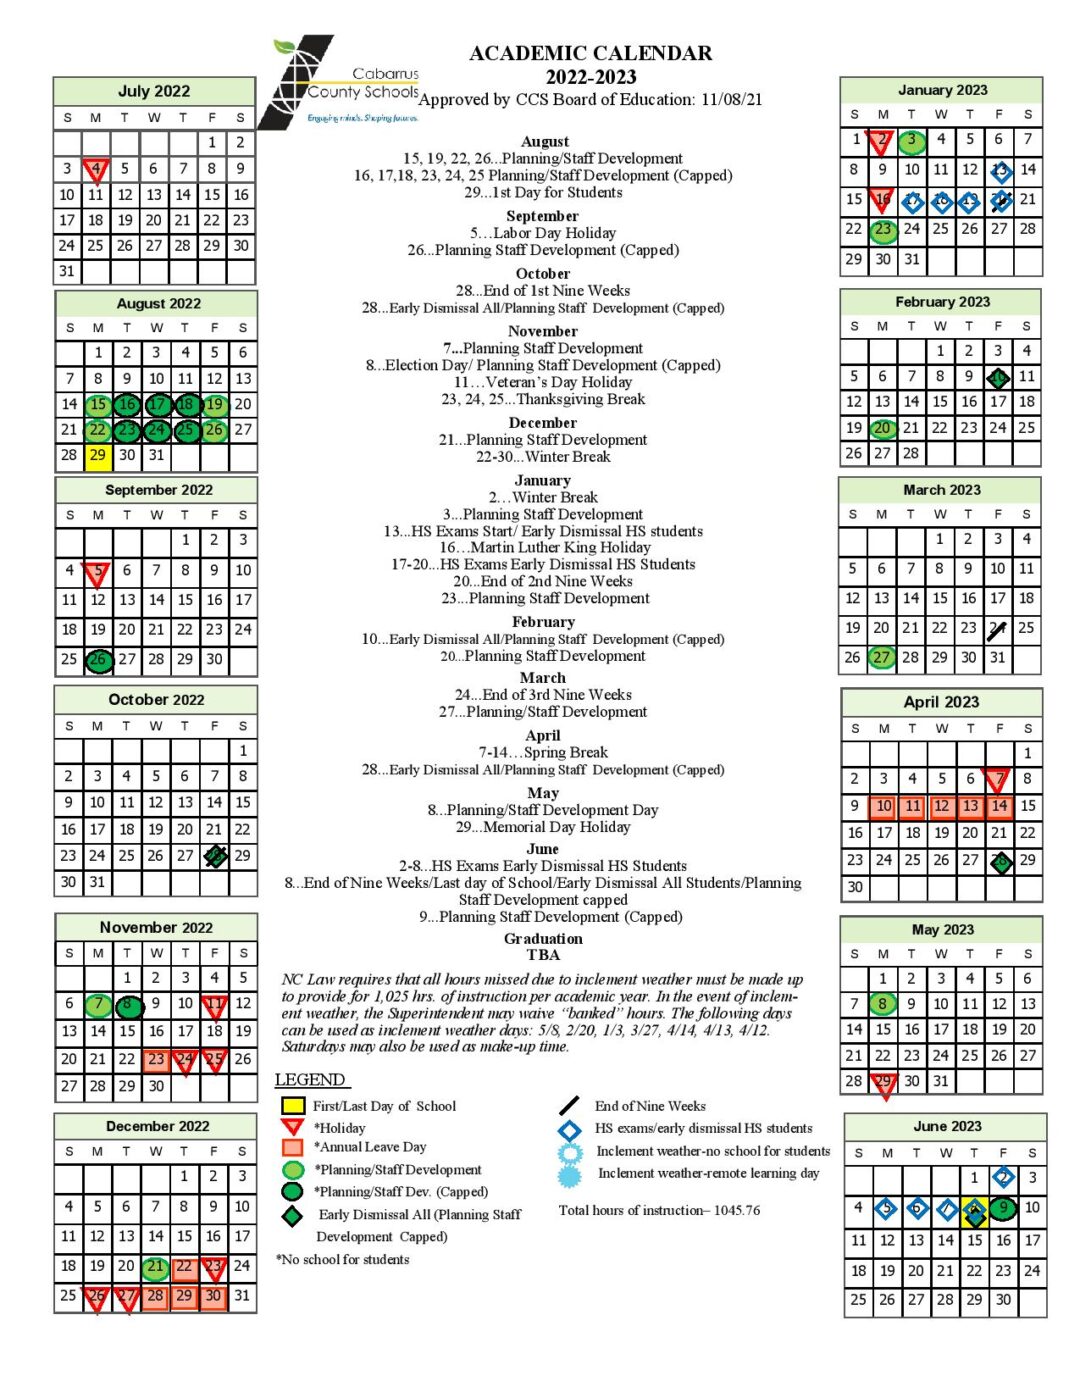 Cabarrus County Schools Calendar 20222023 in PDF